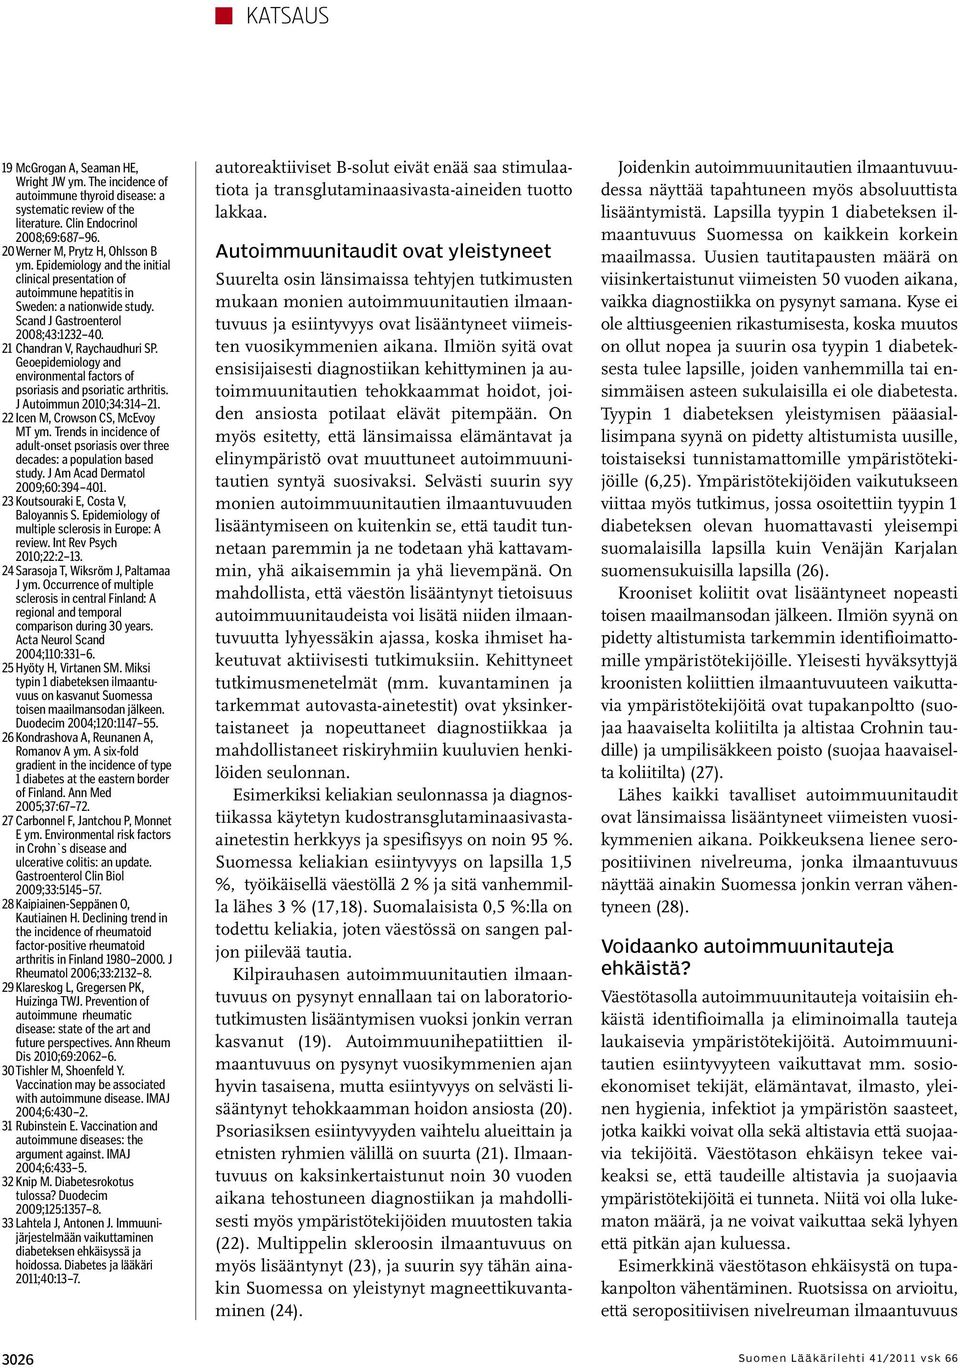 Geoepidemiology and environmental factors of psoriasis and psoriatic arthritis. J Autoimmun 2010;34:314 21. 22 Icen M, Crowson CS, McEvoy MT ym.